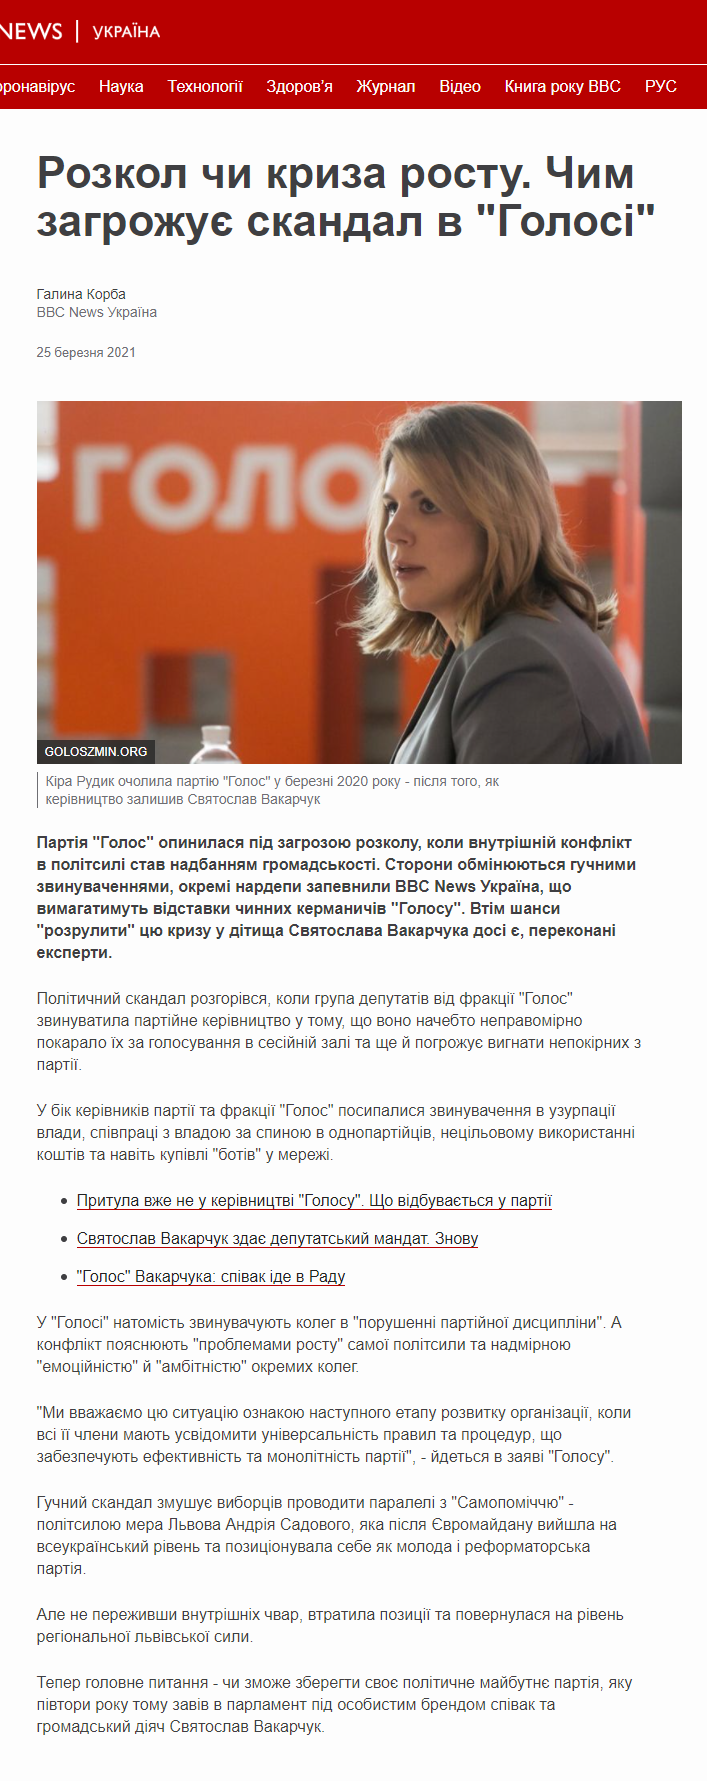 https://www.bbc.com/ukrainian/features-56470912